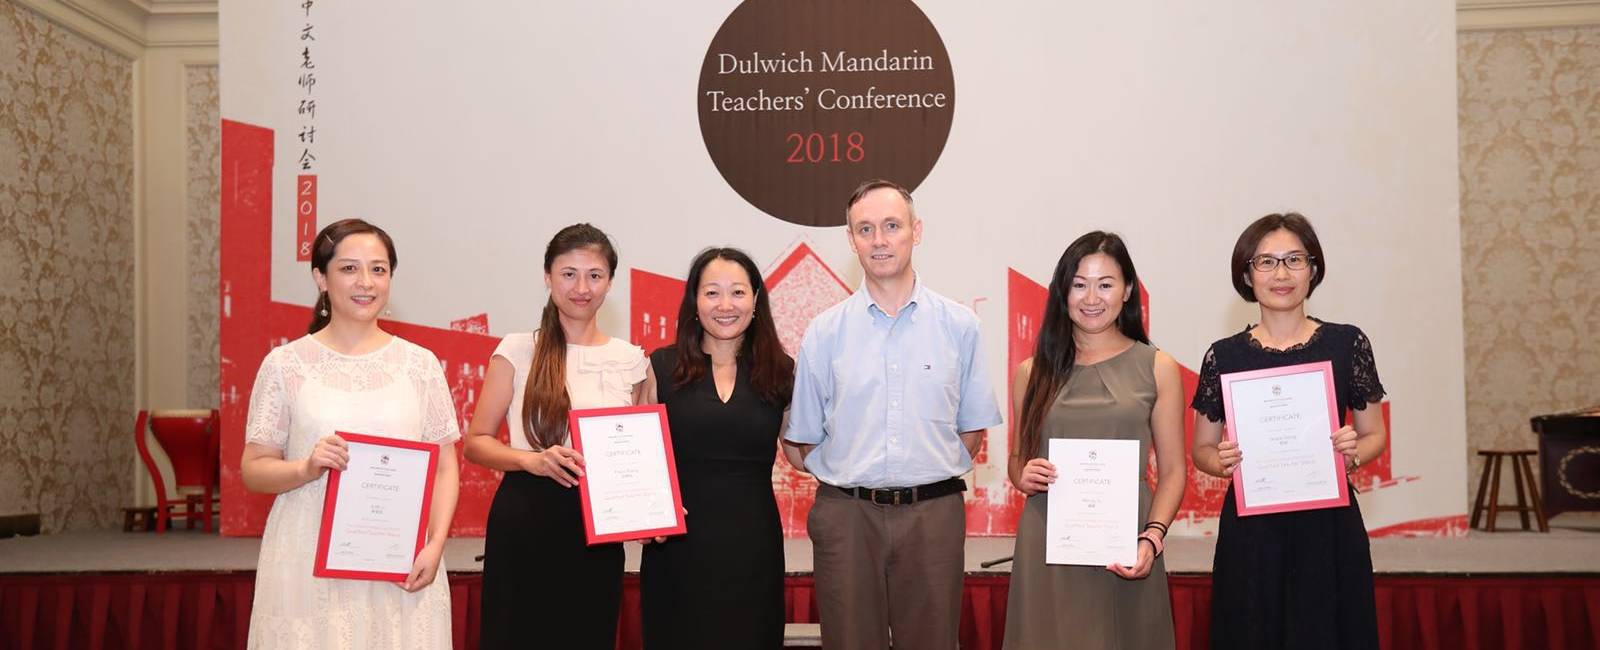 Dulwich Mandarin Teachers' Conference 2018